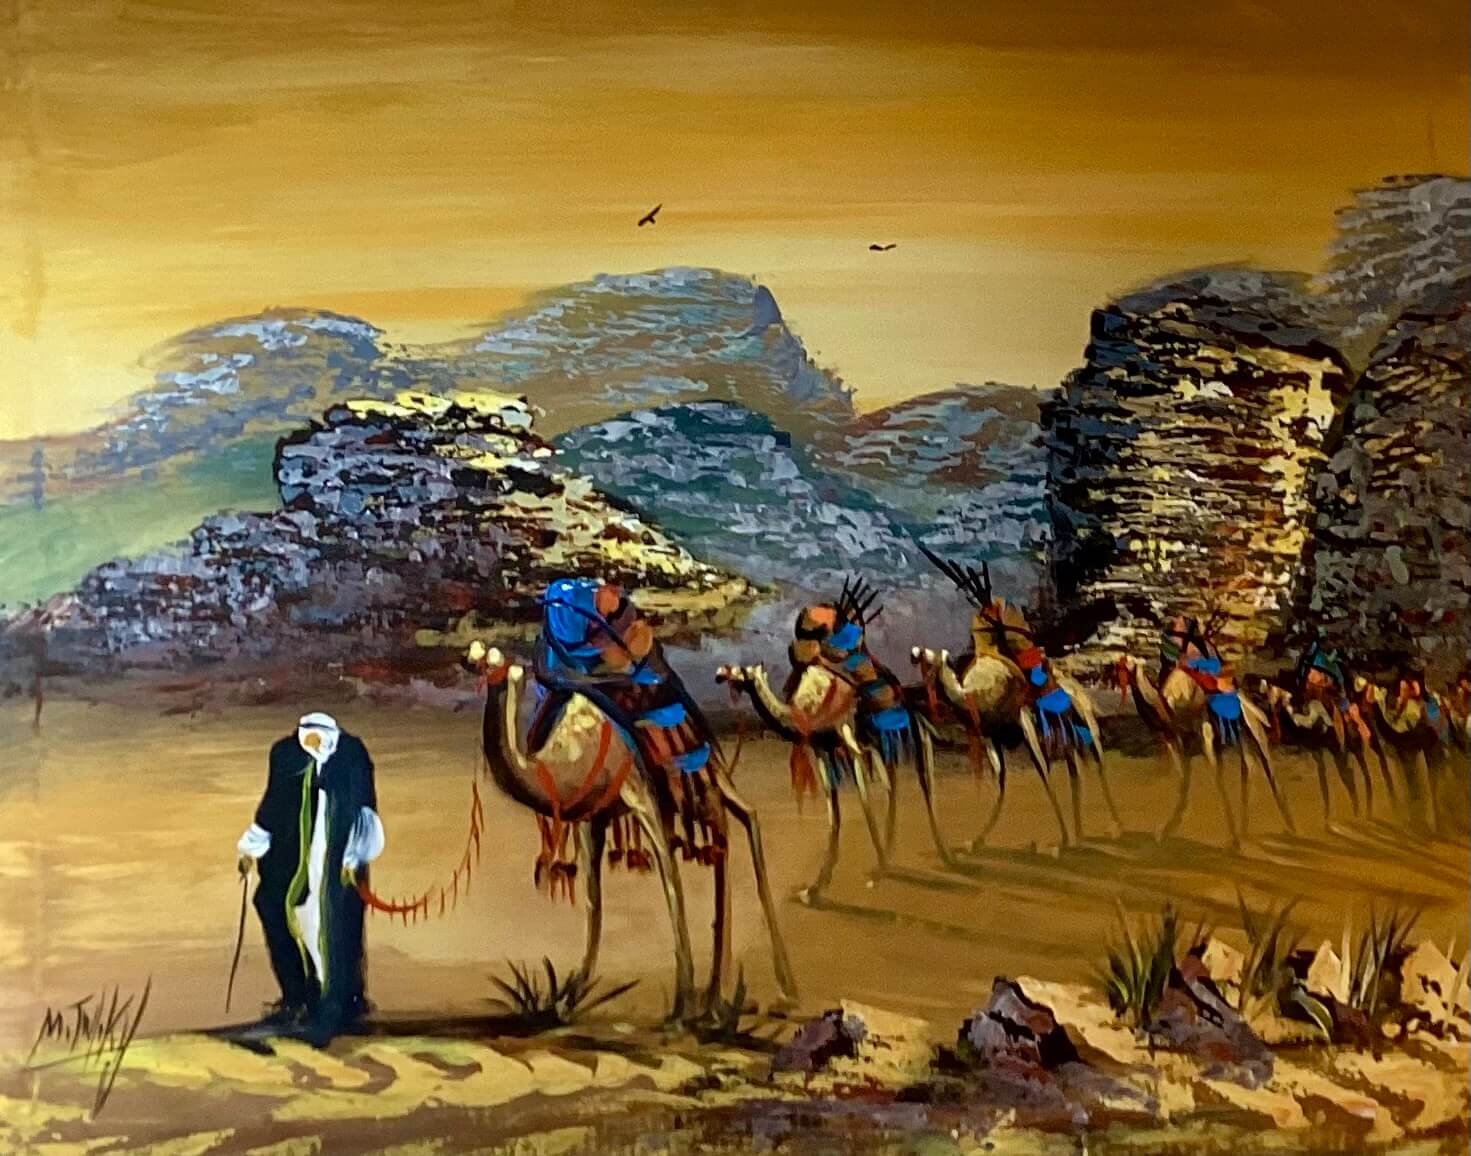 The_desert_and_the_camels-الصحراء_و_الجمال